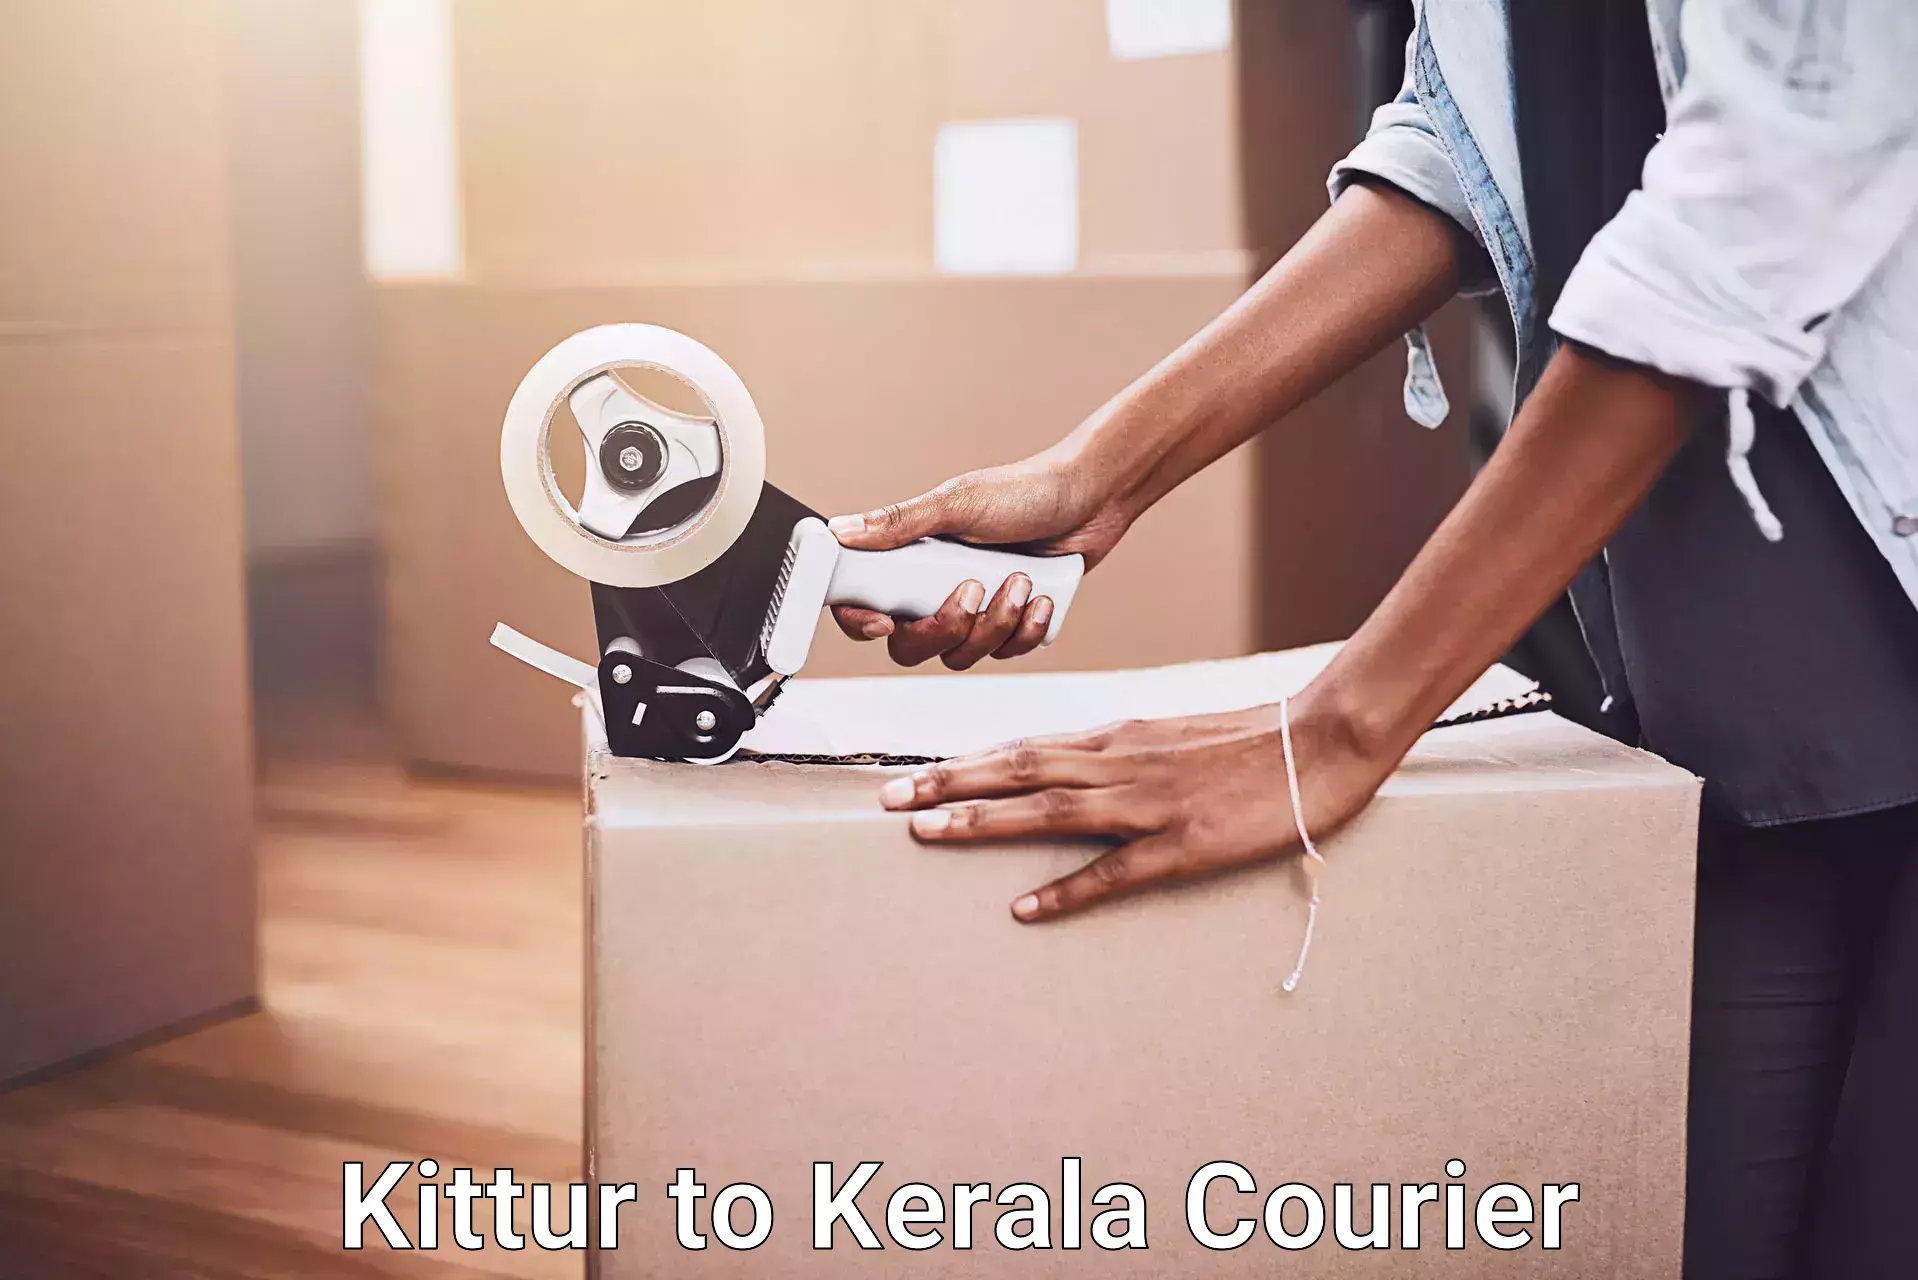 Professional movers Kittur to Kerala